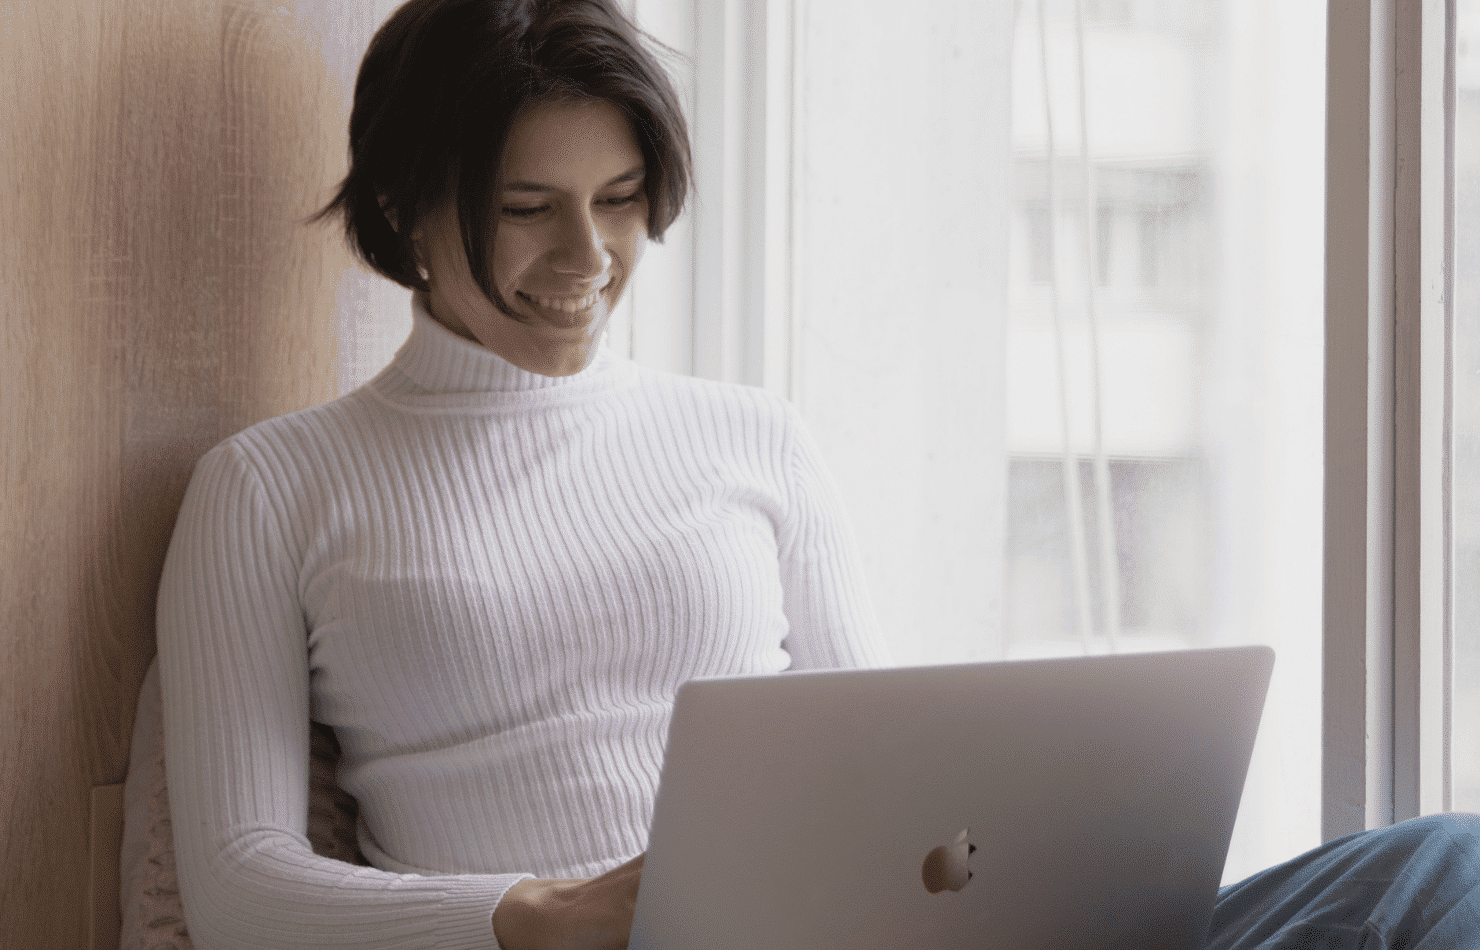 Woman near window using a Mac